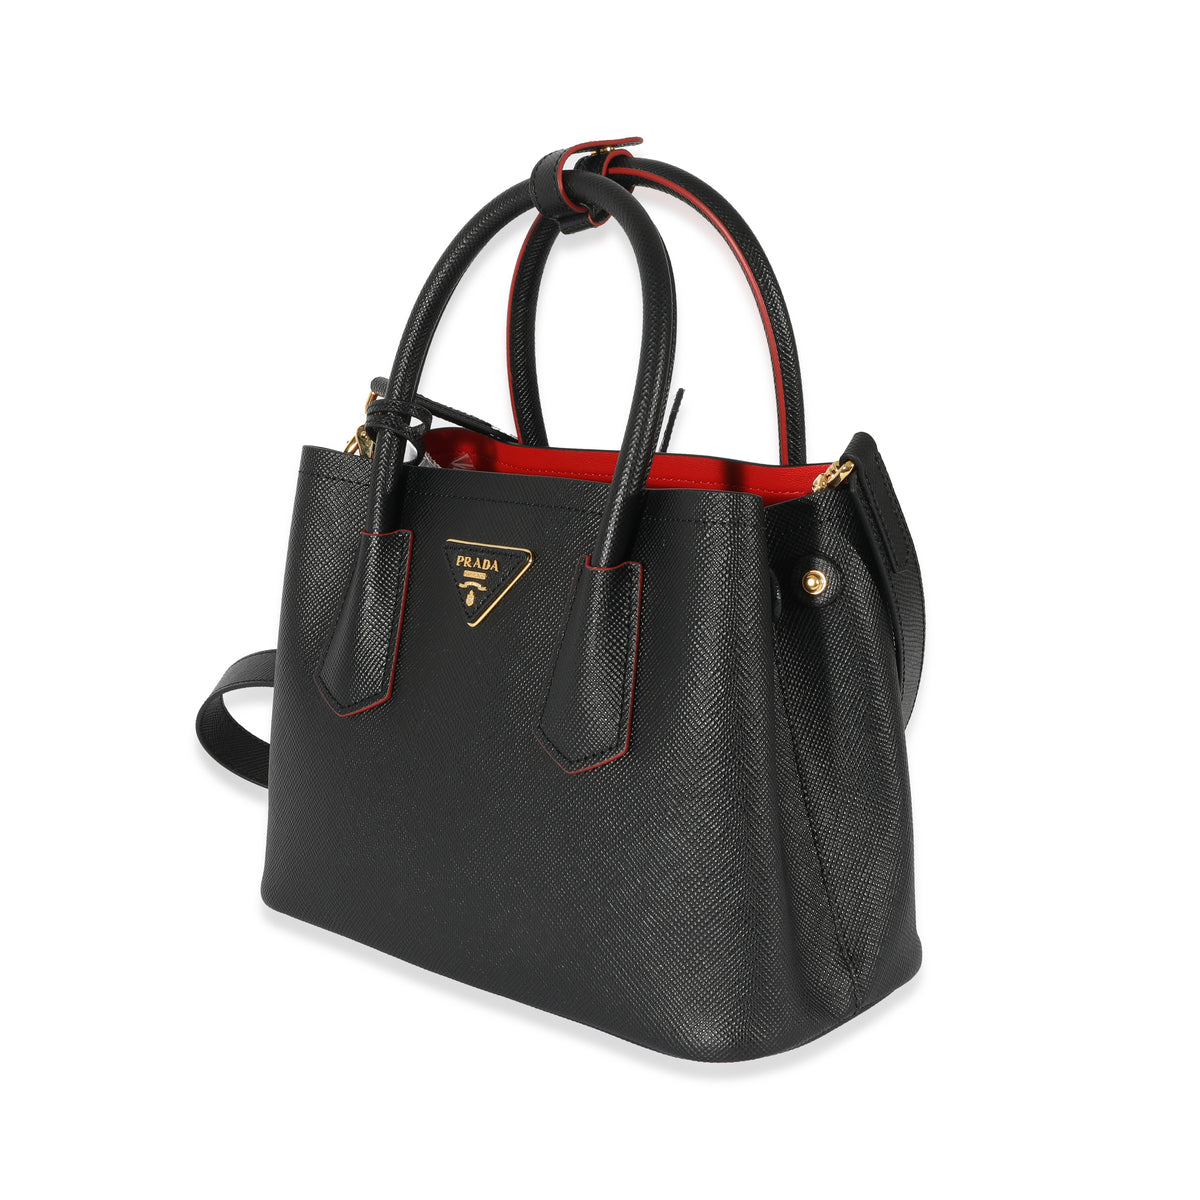 Black/fiery Red Medium Saffiano Leather Double Prada Bag